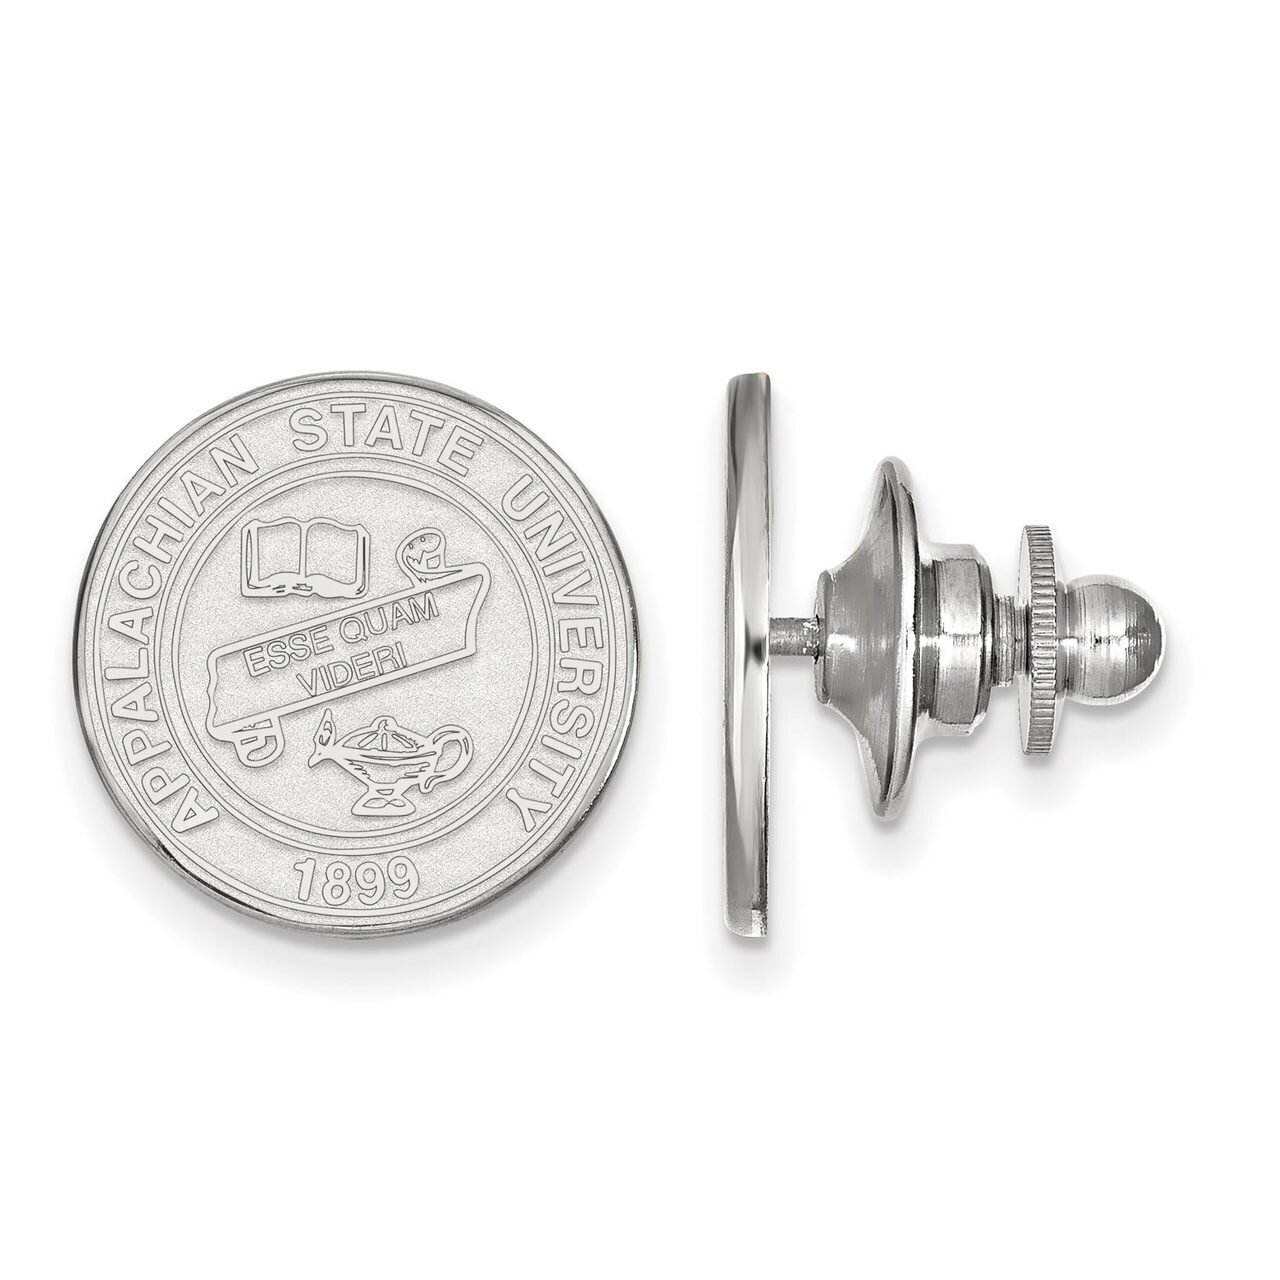 Appalachian State University Crest Lapel Pin Sterling Silver SS021APS